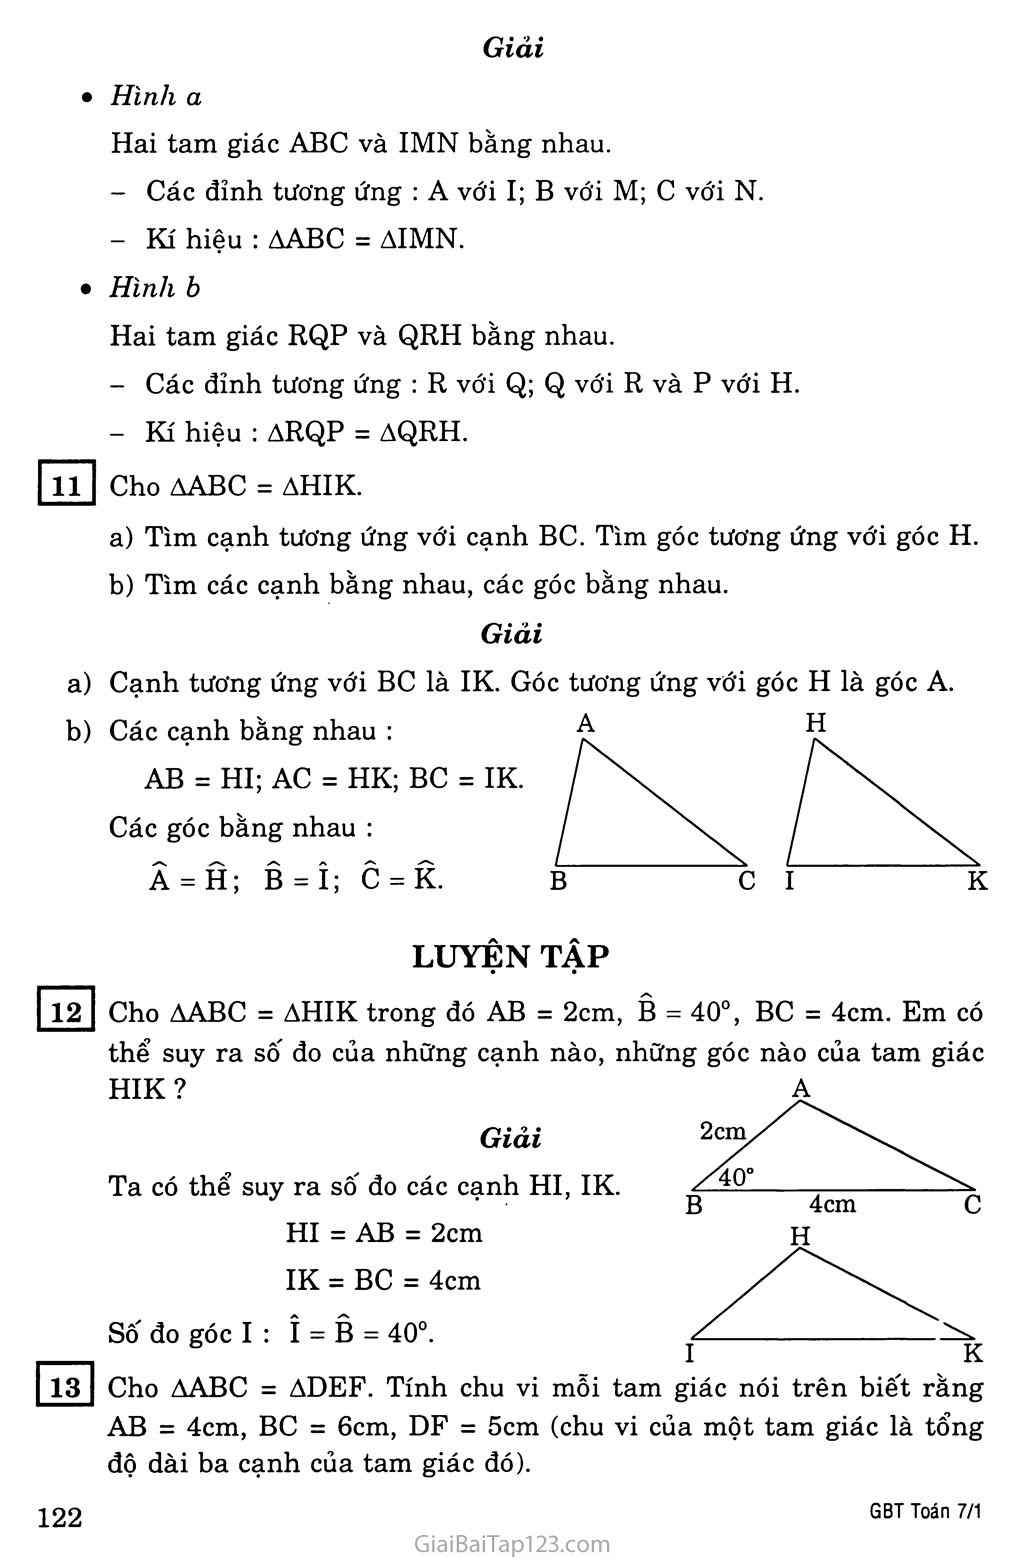 §2. Hai tam giác bằng nhau trang 3